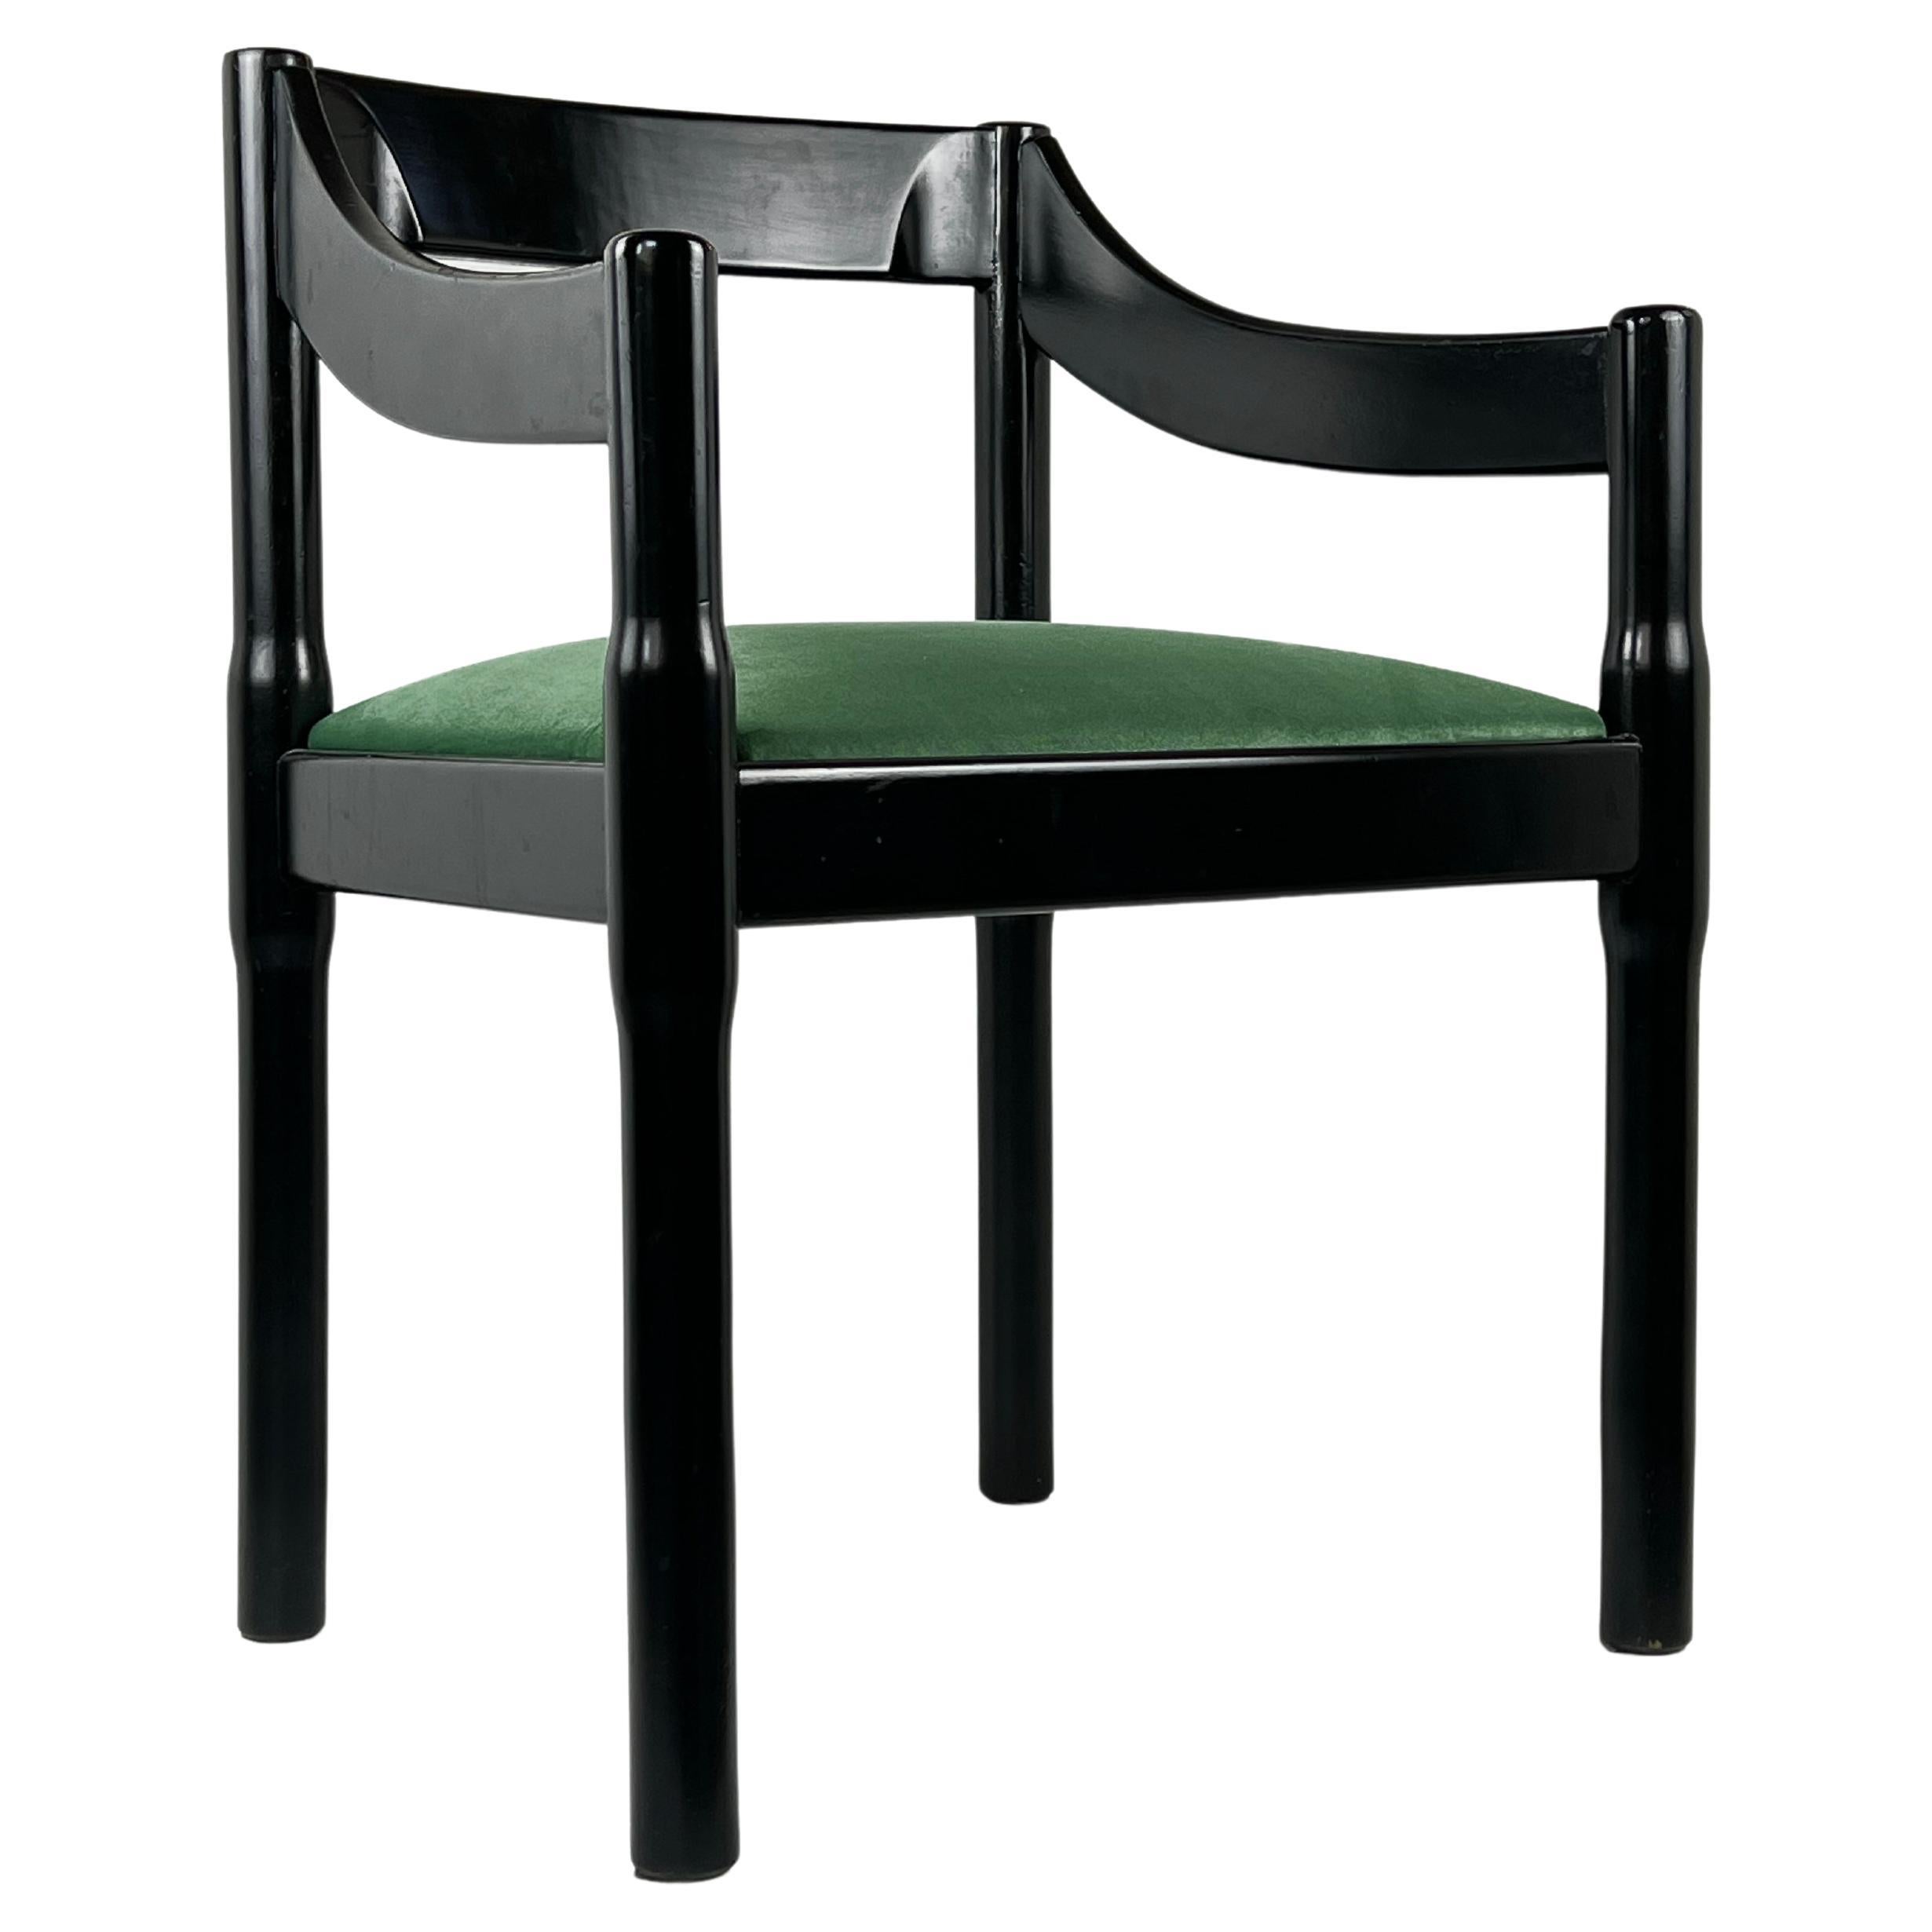 1st Edition Carimate Armchair Designed by Vico Magistretti for Comi (Artemide) For Sale